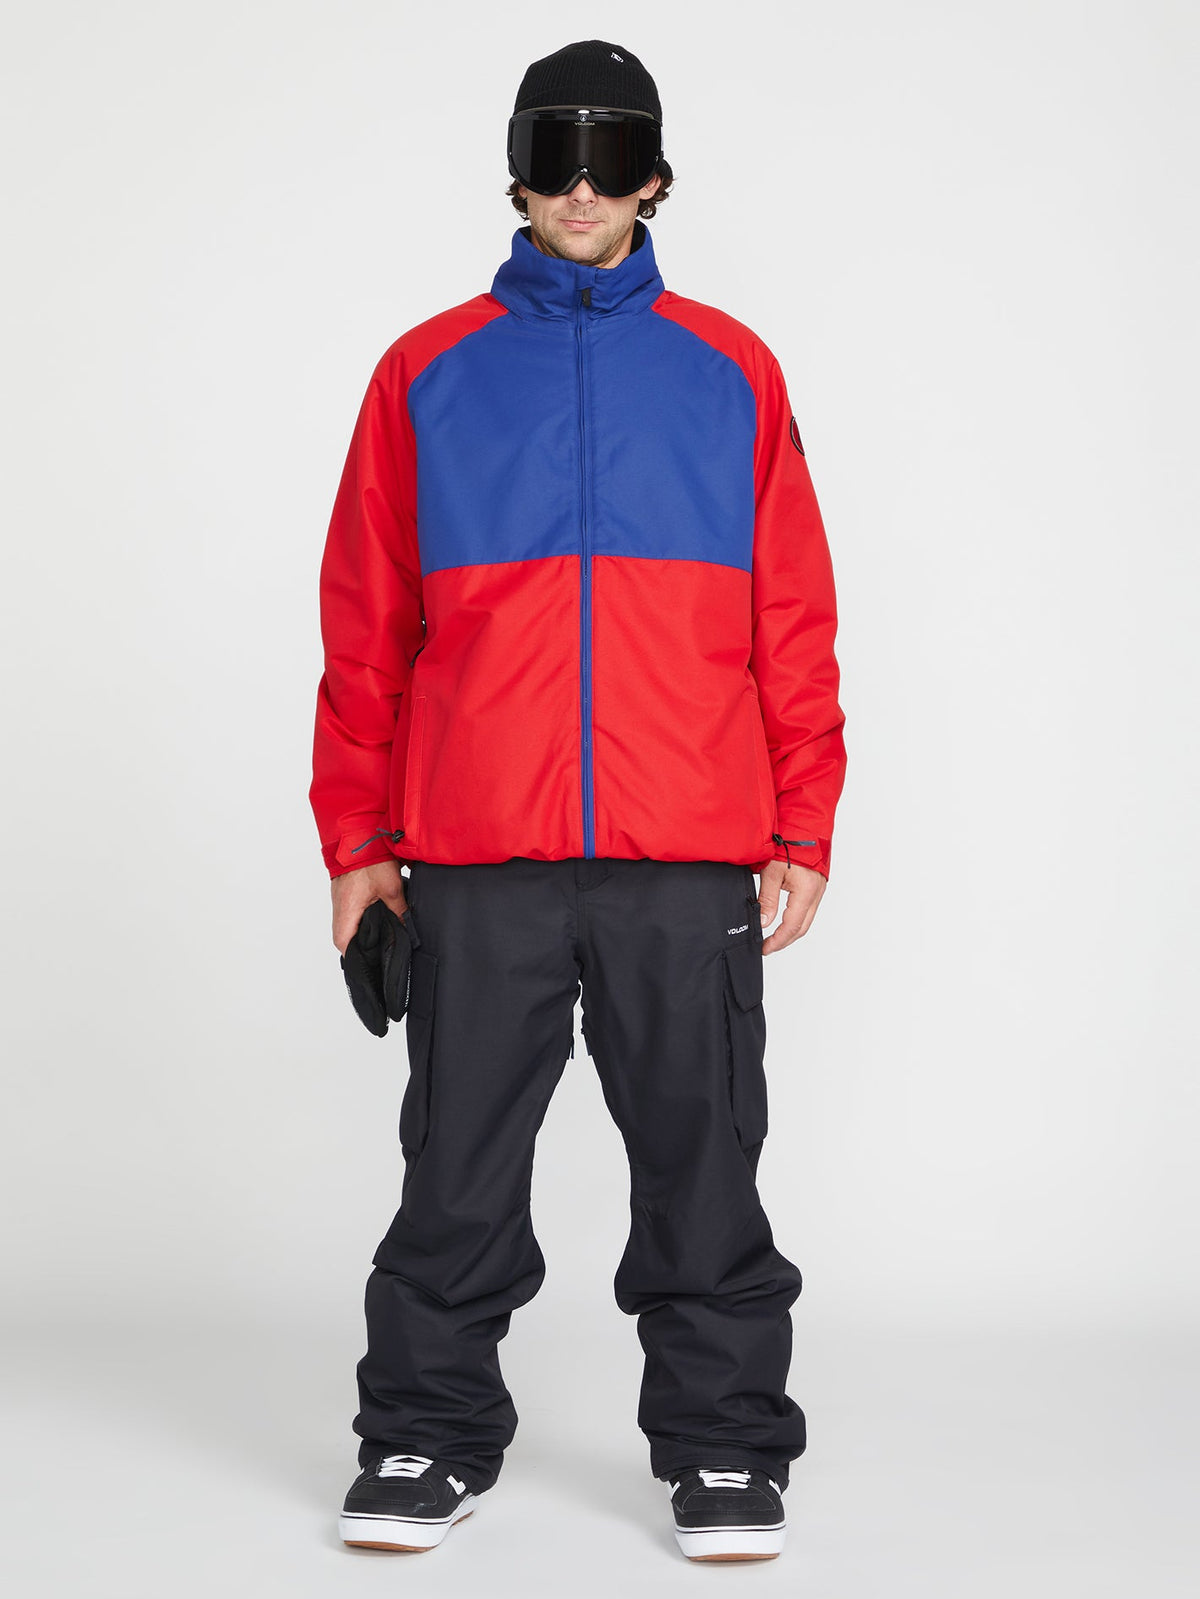 Volcom 2836 Insulated Men's Snowboarding & Ski Jacket Red